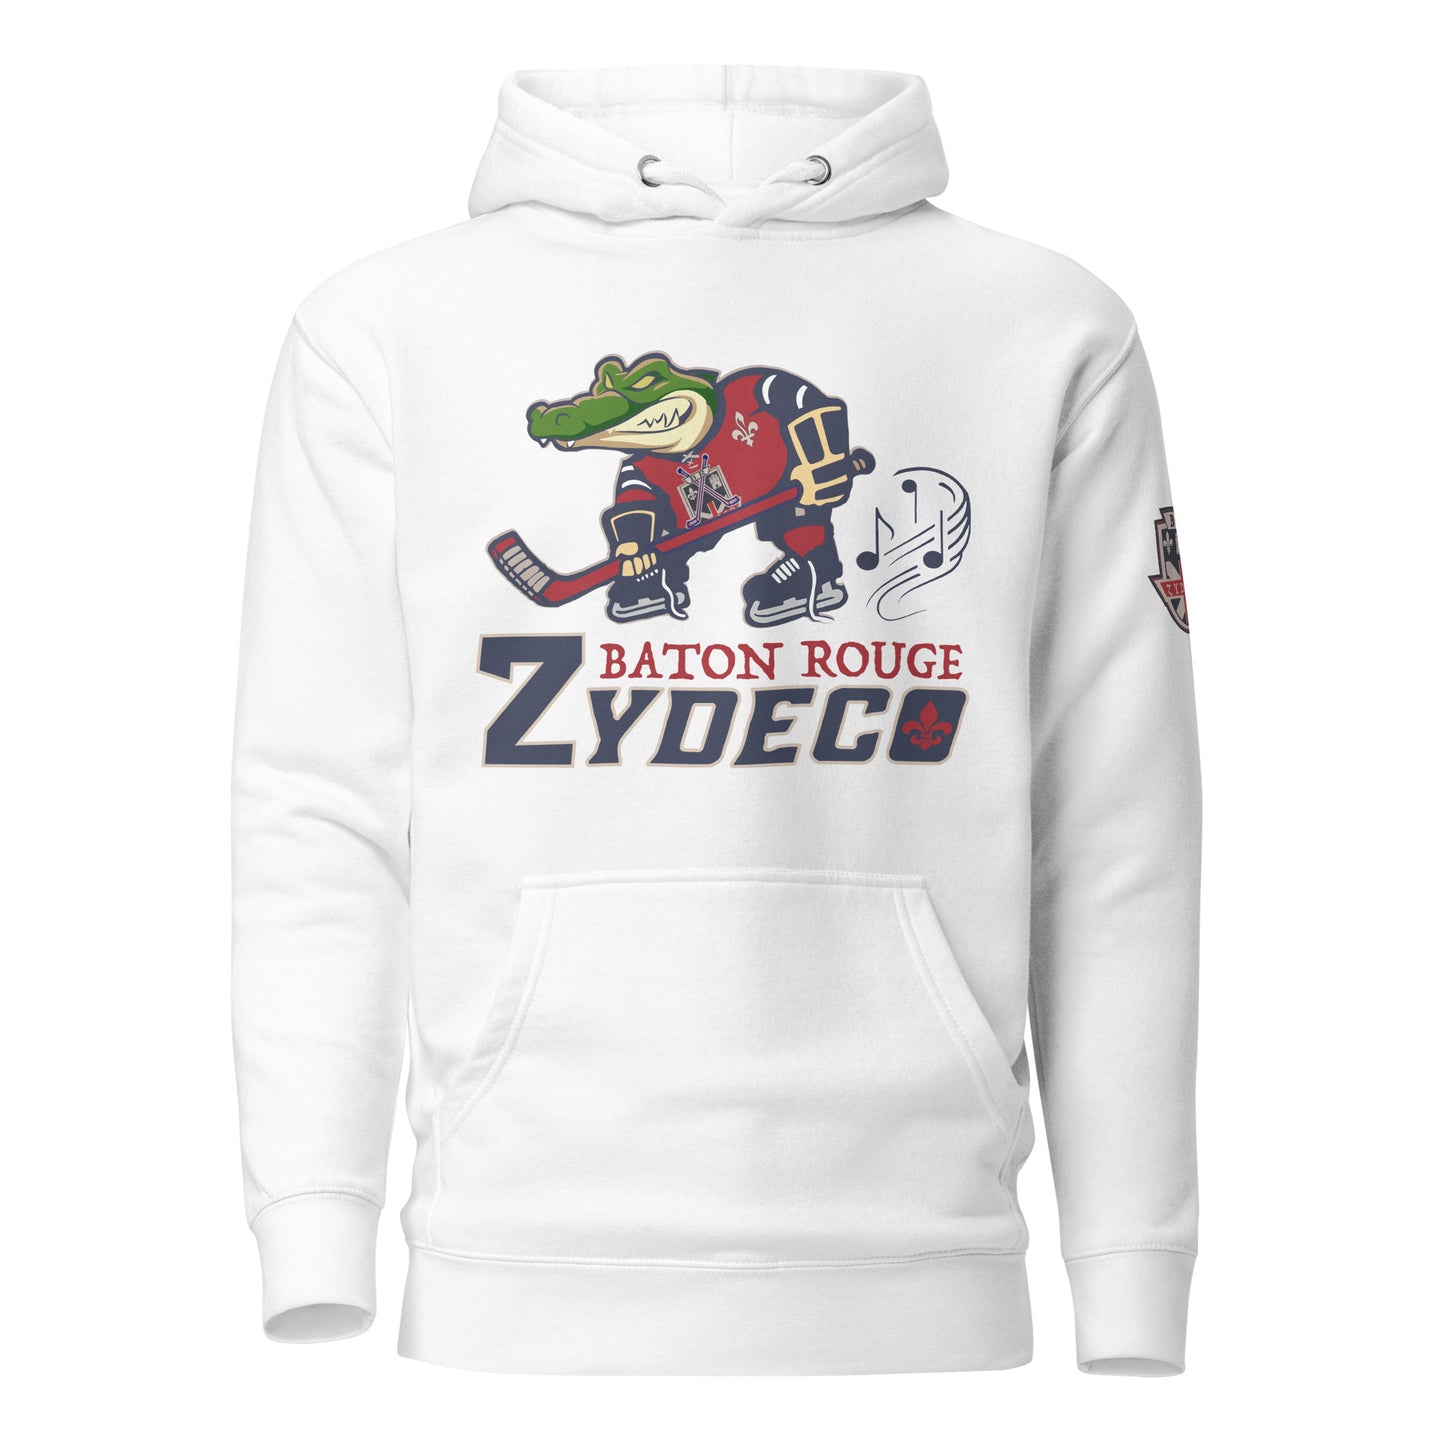 ZYDECO - AL LOGO & BADGE ON SLEEVE - Unisex Hoodie